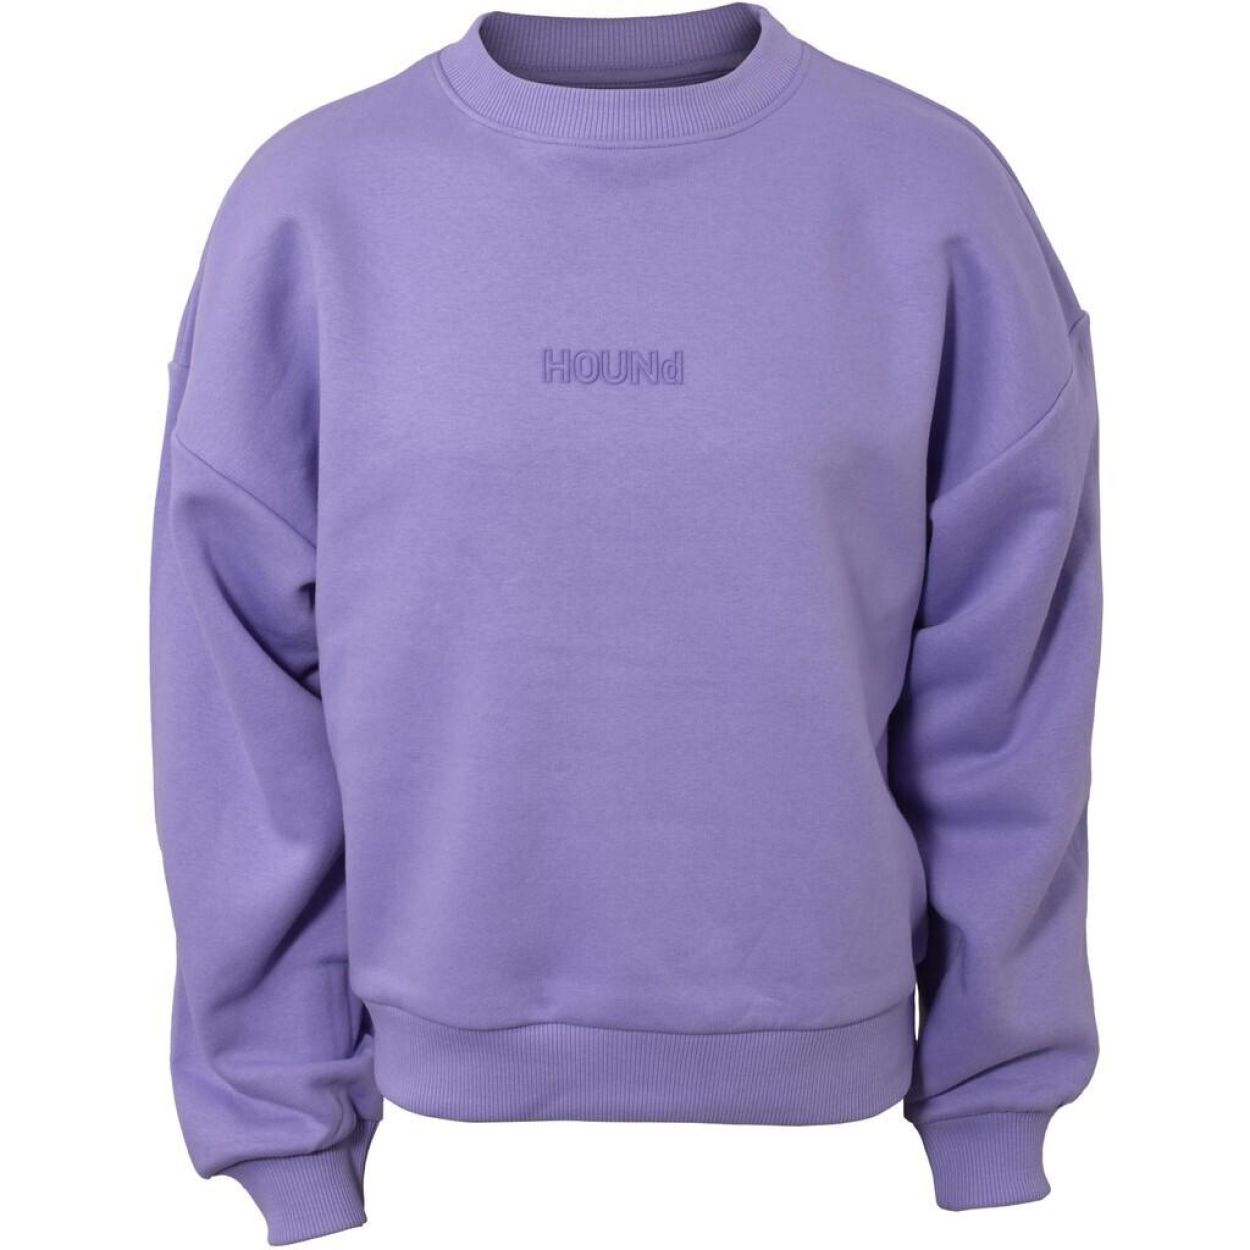 HOUNd Sweatshirt (7230868/516 Lilac) - WeekendMode